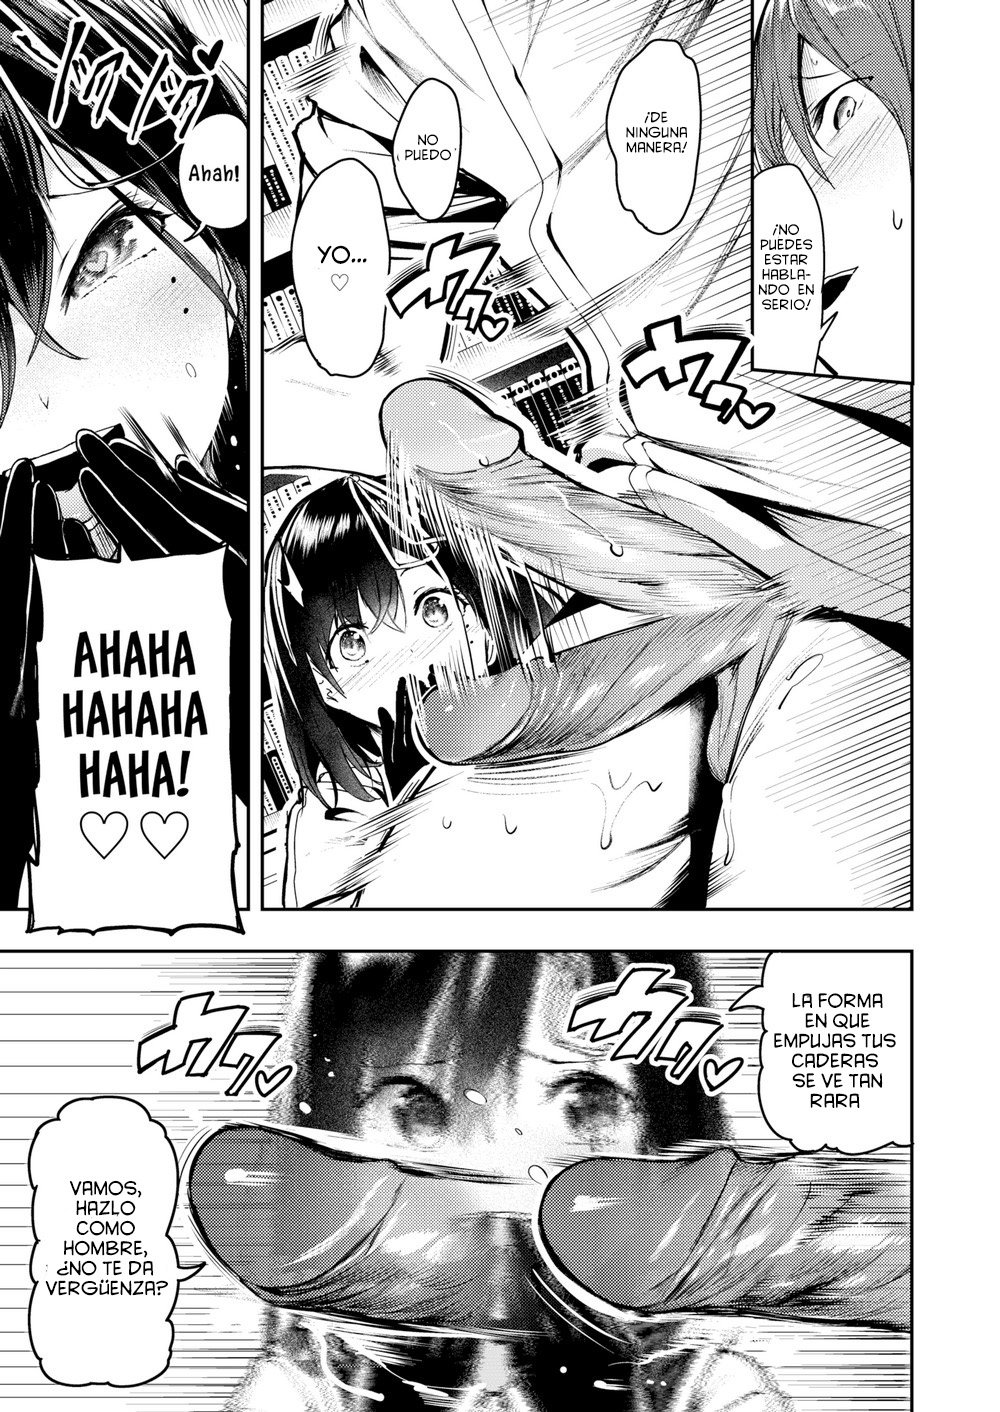 Haramiya-san ejaculation control - 19